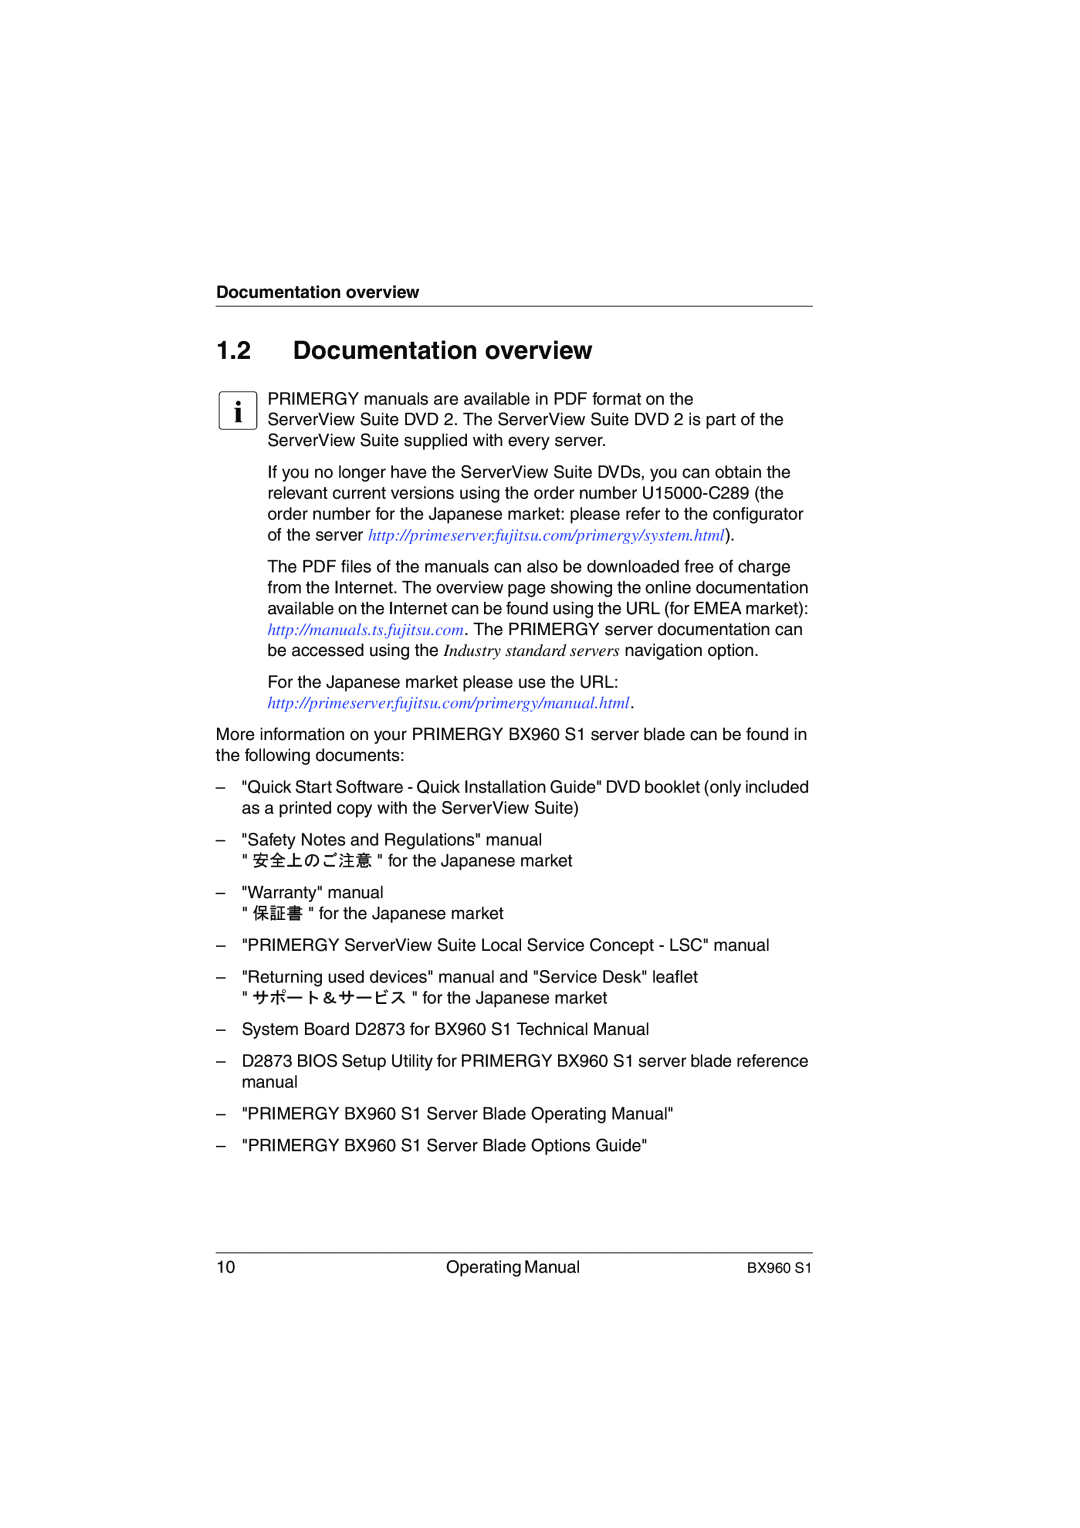 Fujitsu BX960 S1 manual Documentation overview 